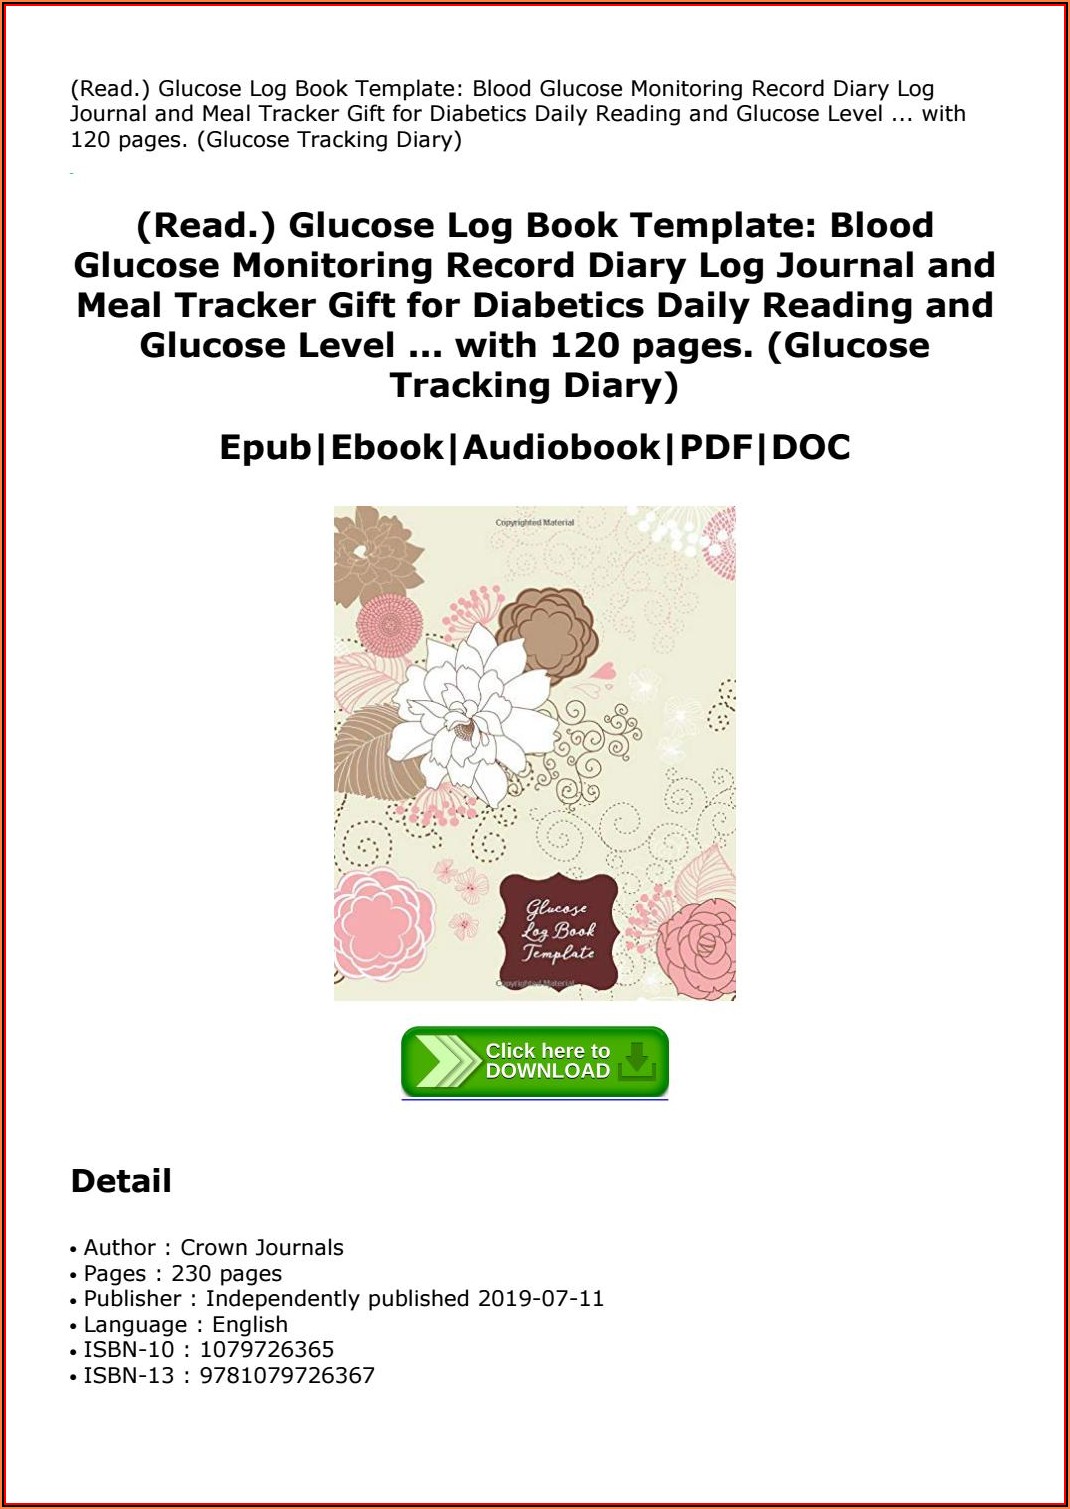 Blood Glucose Log Book Template